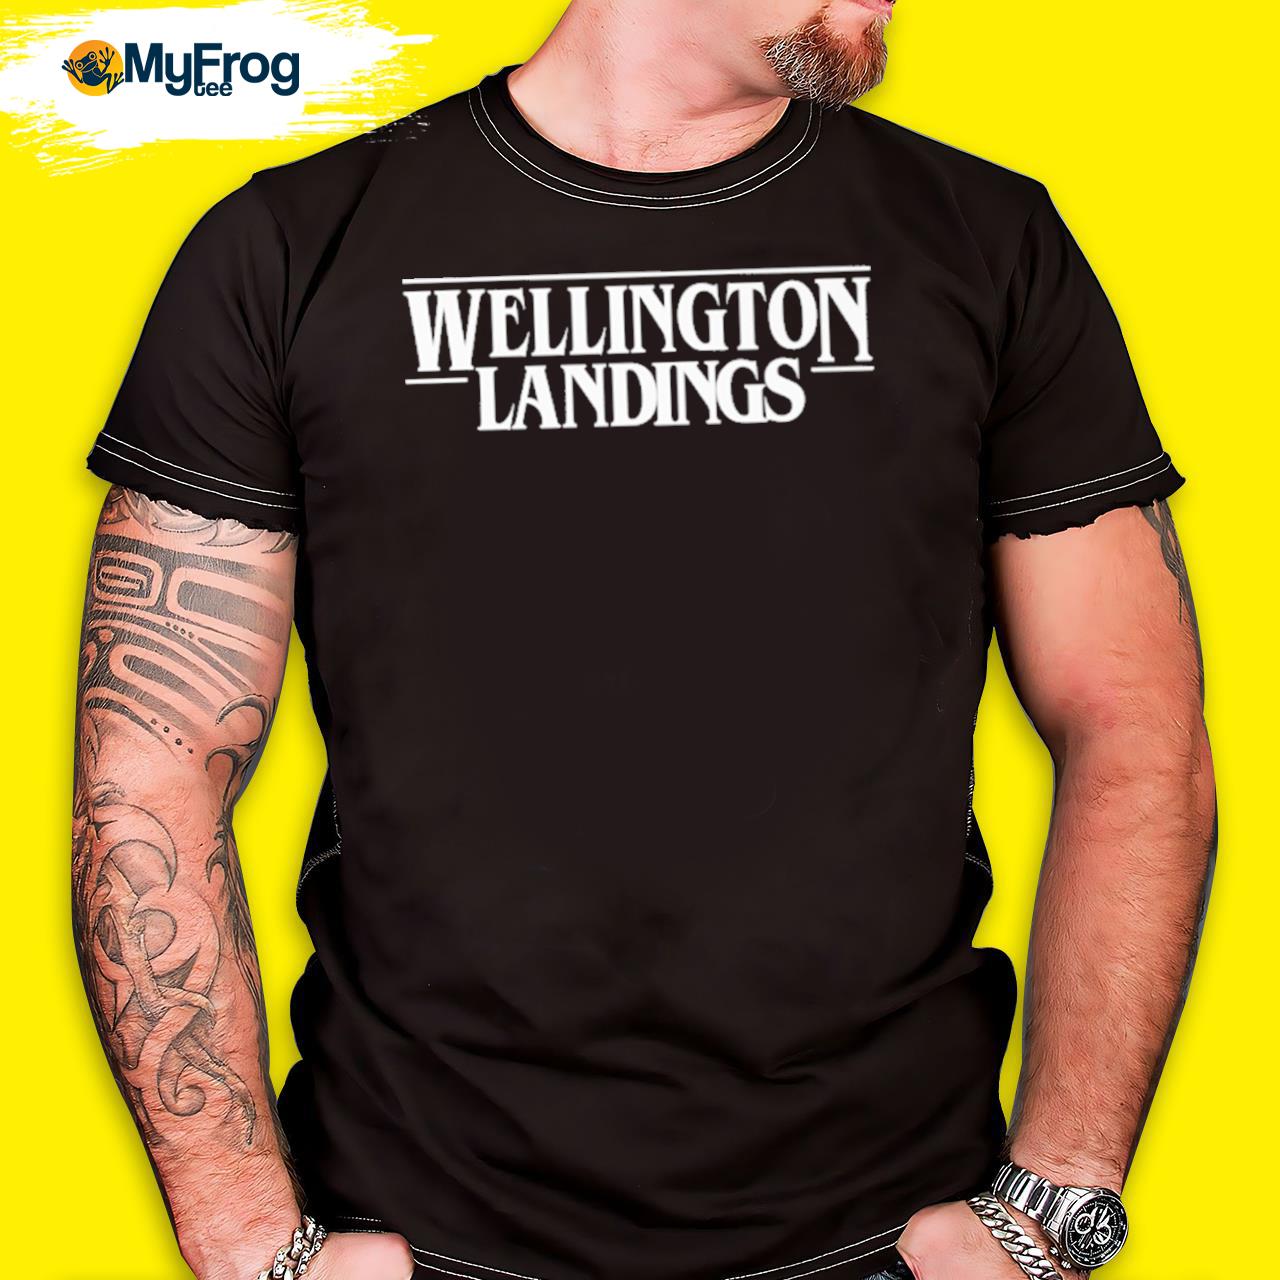 Wellington landings shirt